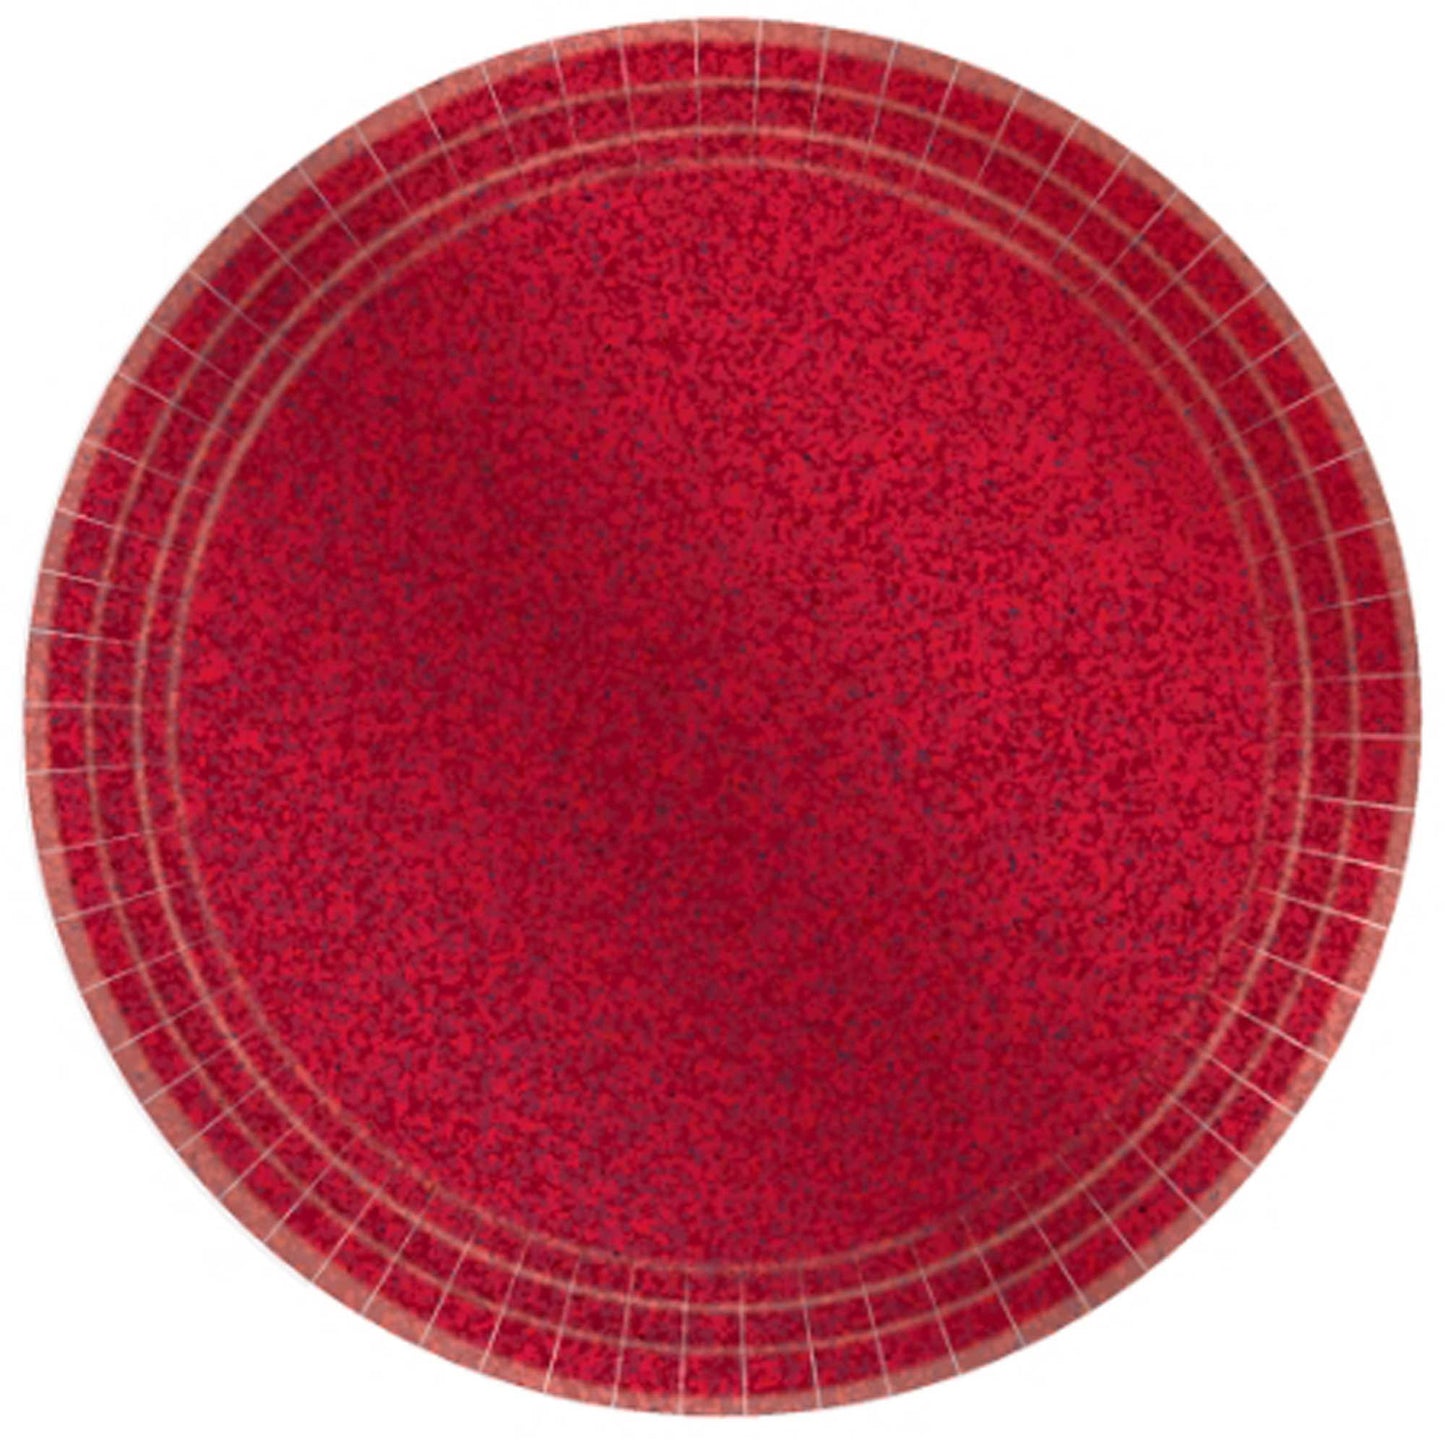 Prismatic 17cm Apple Red Round Paper Plates